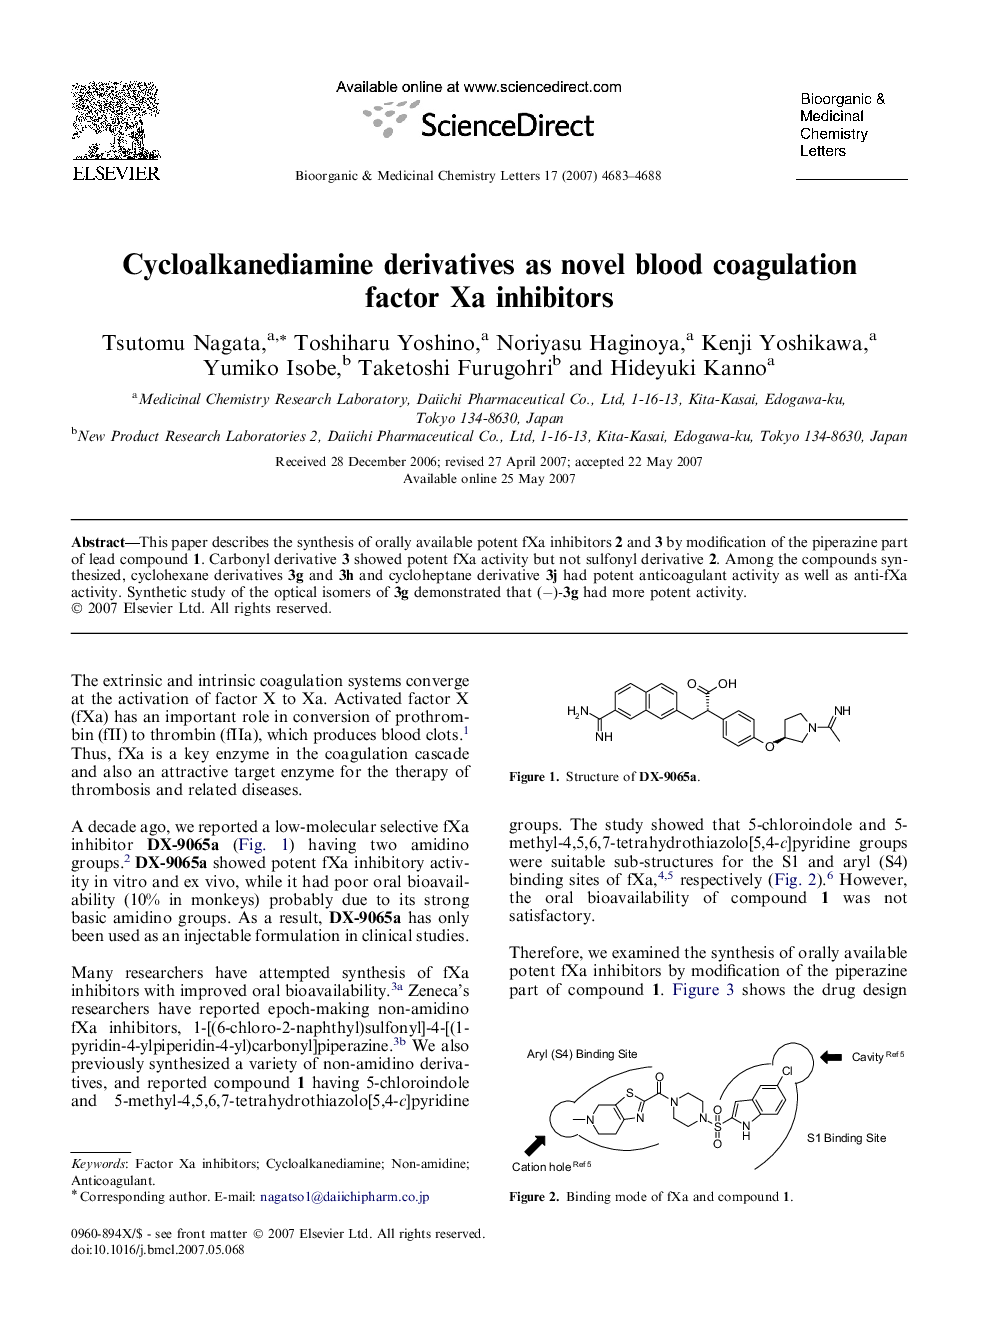 Cycloalkanediamine derivatives as novel blood coagulation factor Xa inhibitors